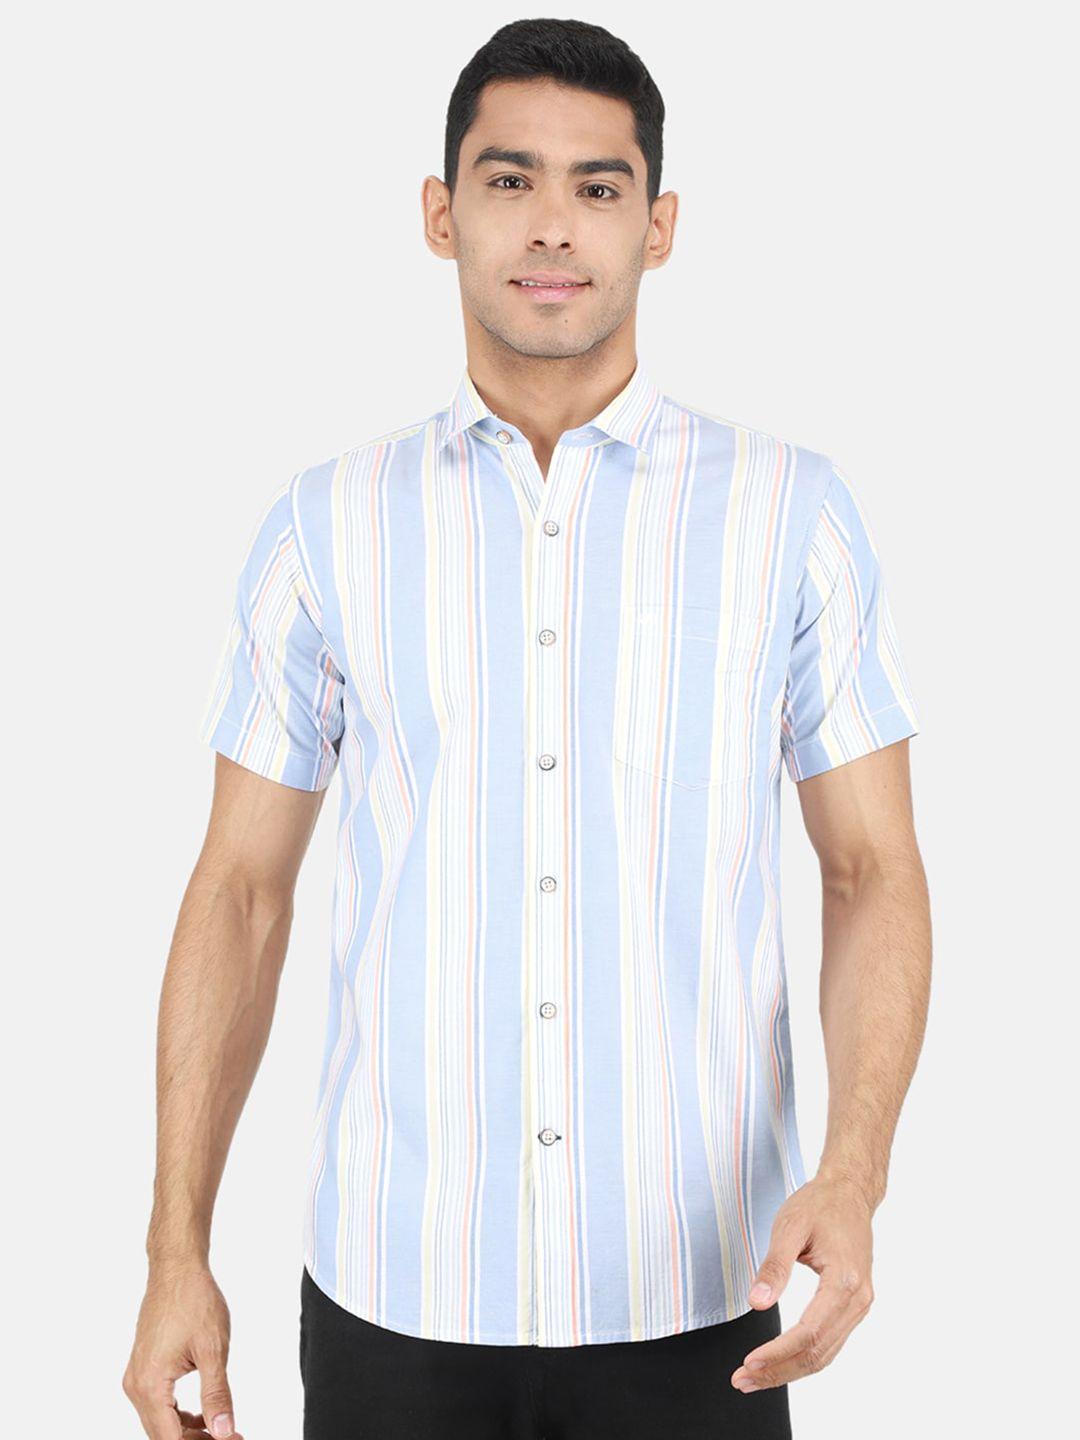 monte carlo vertical striped cotton casual shirt